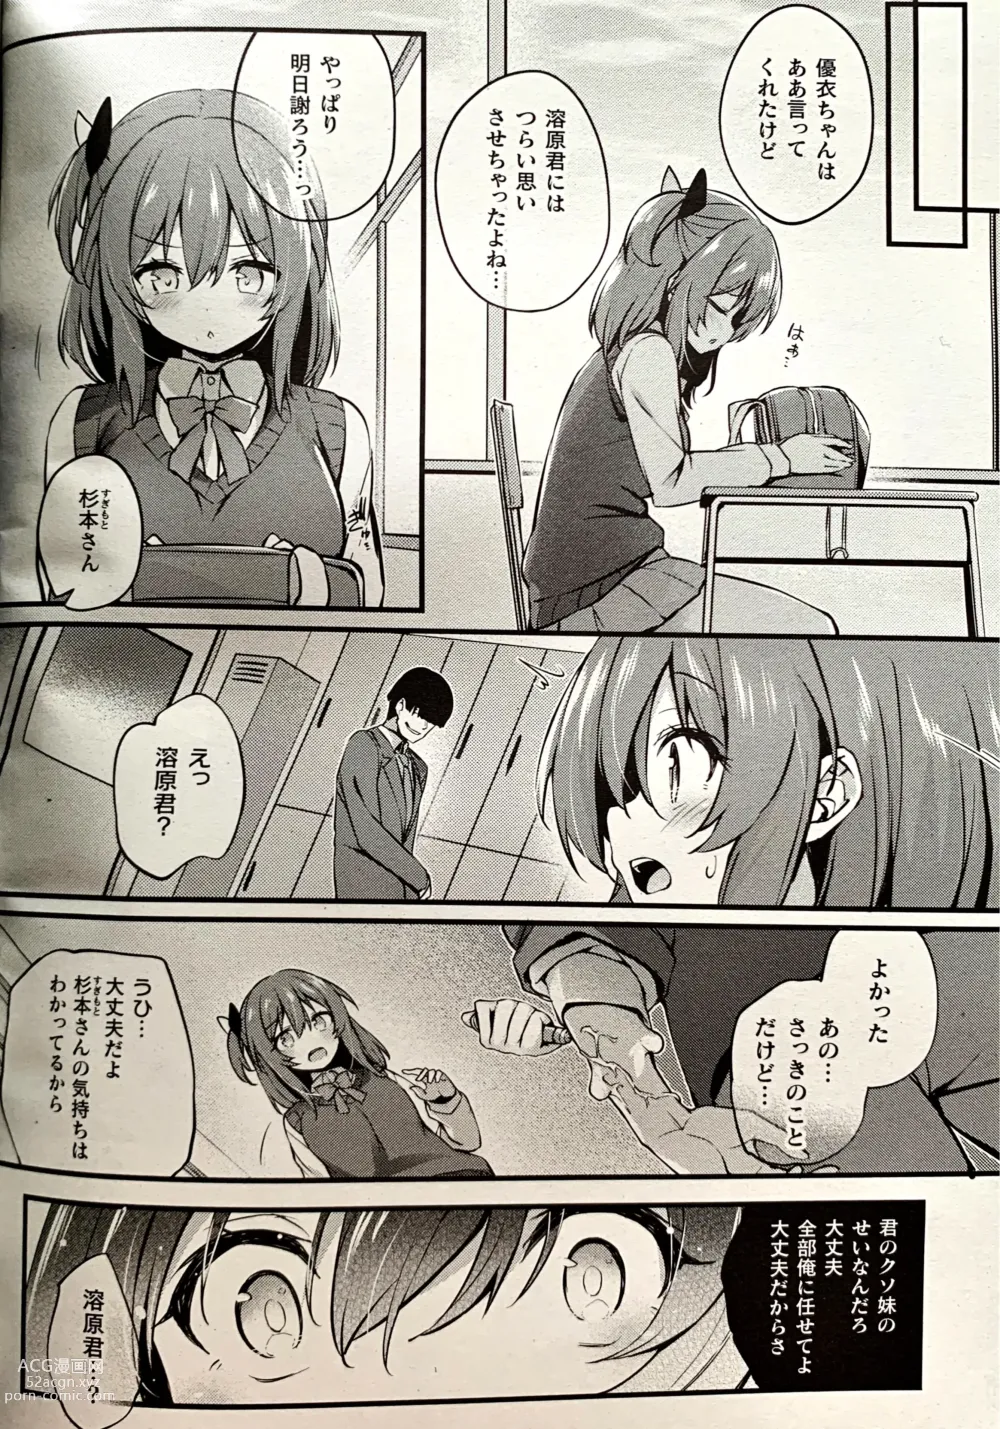 Page 4 of manga MAZARIAI